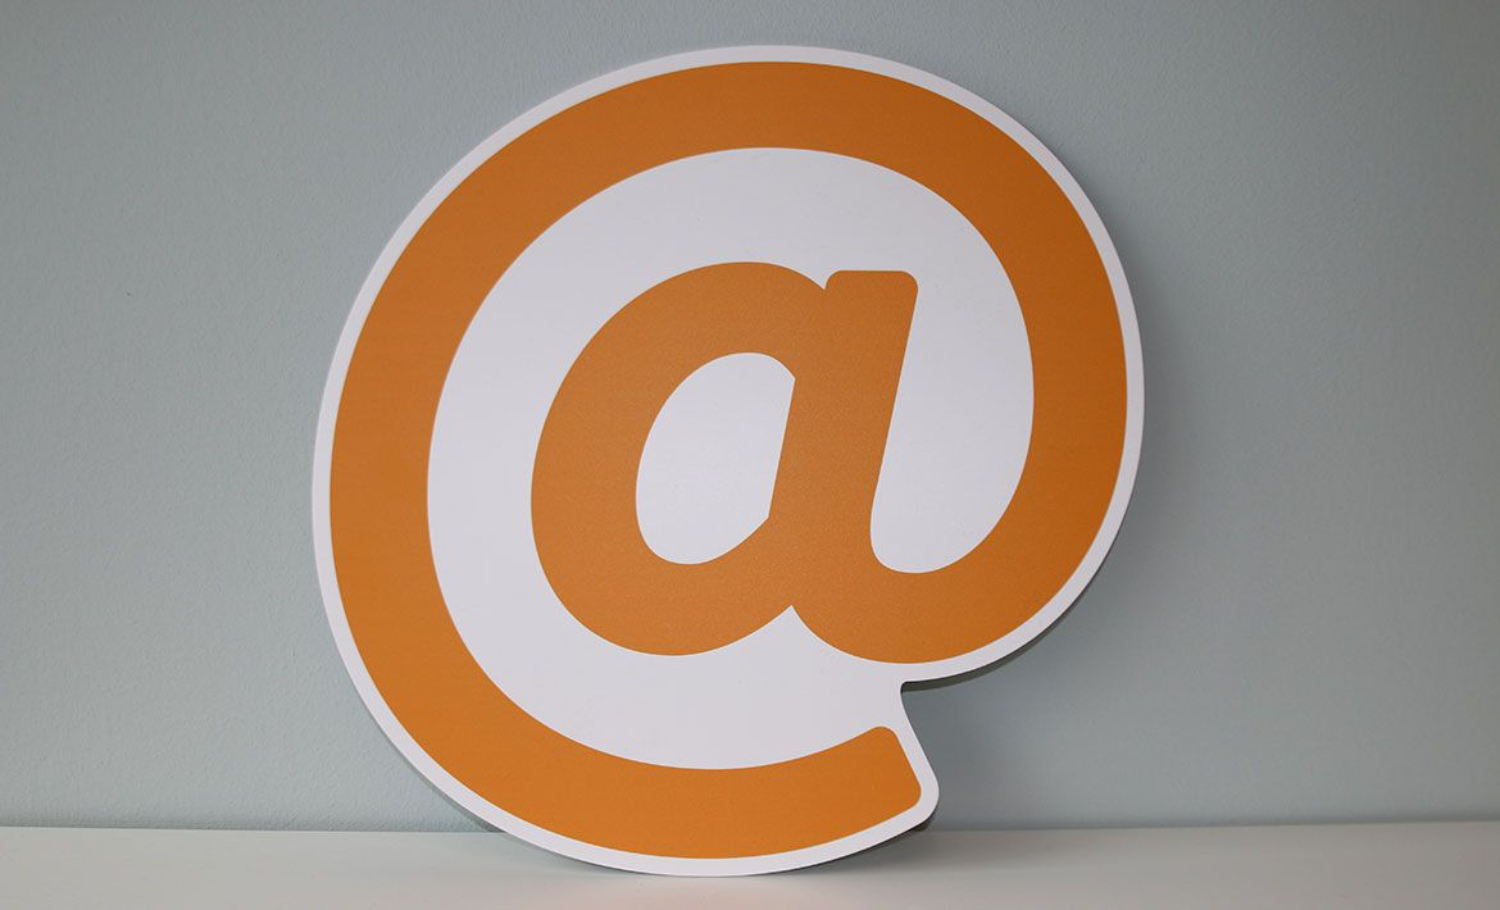 Best online fake email address generators